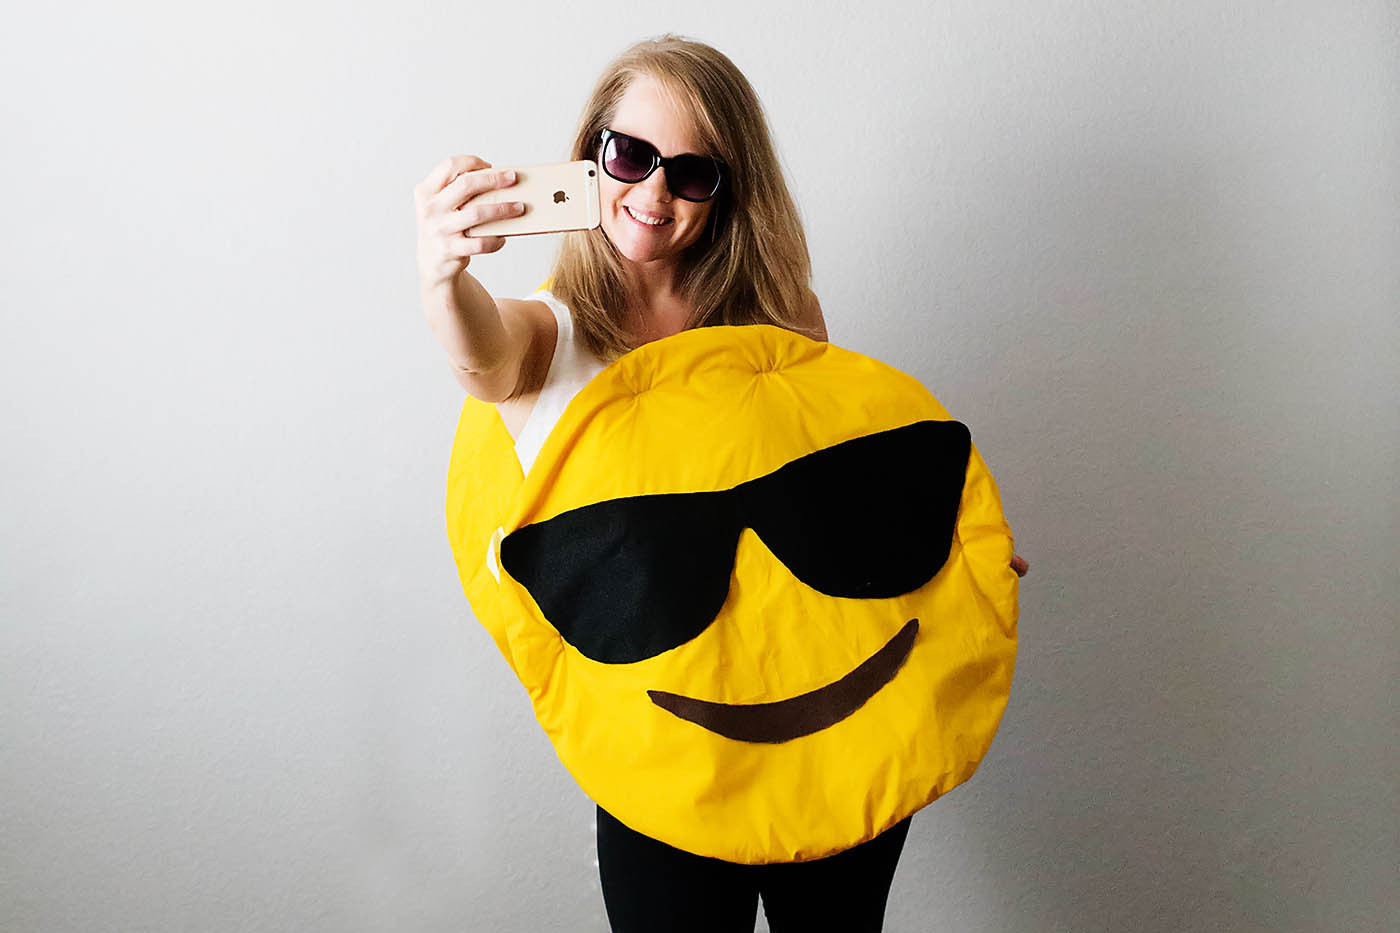 DIY Emoji Costume
 DIY Pineapple and Emoji Costume from Savers